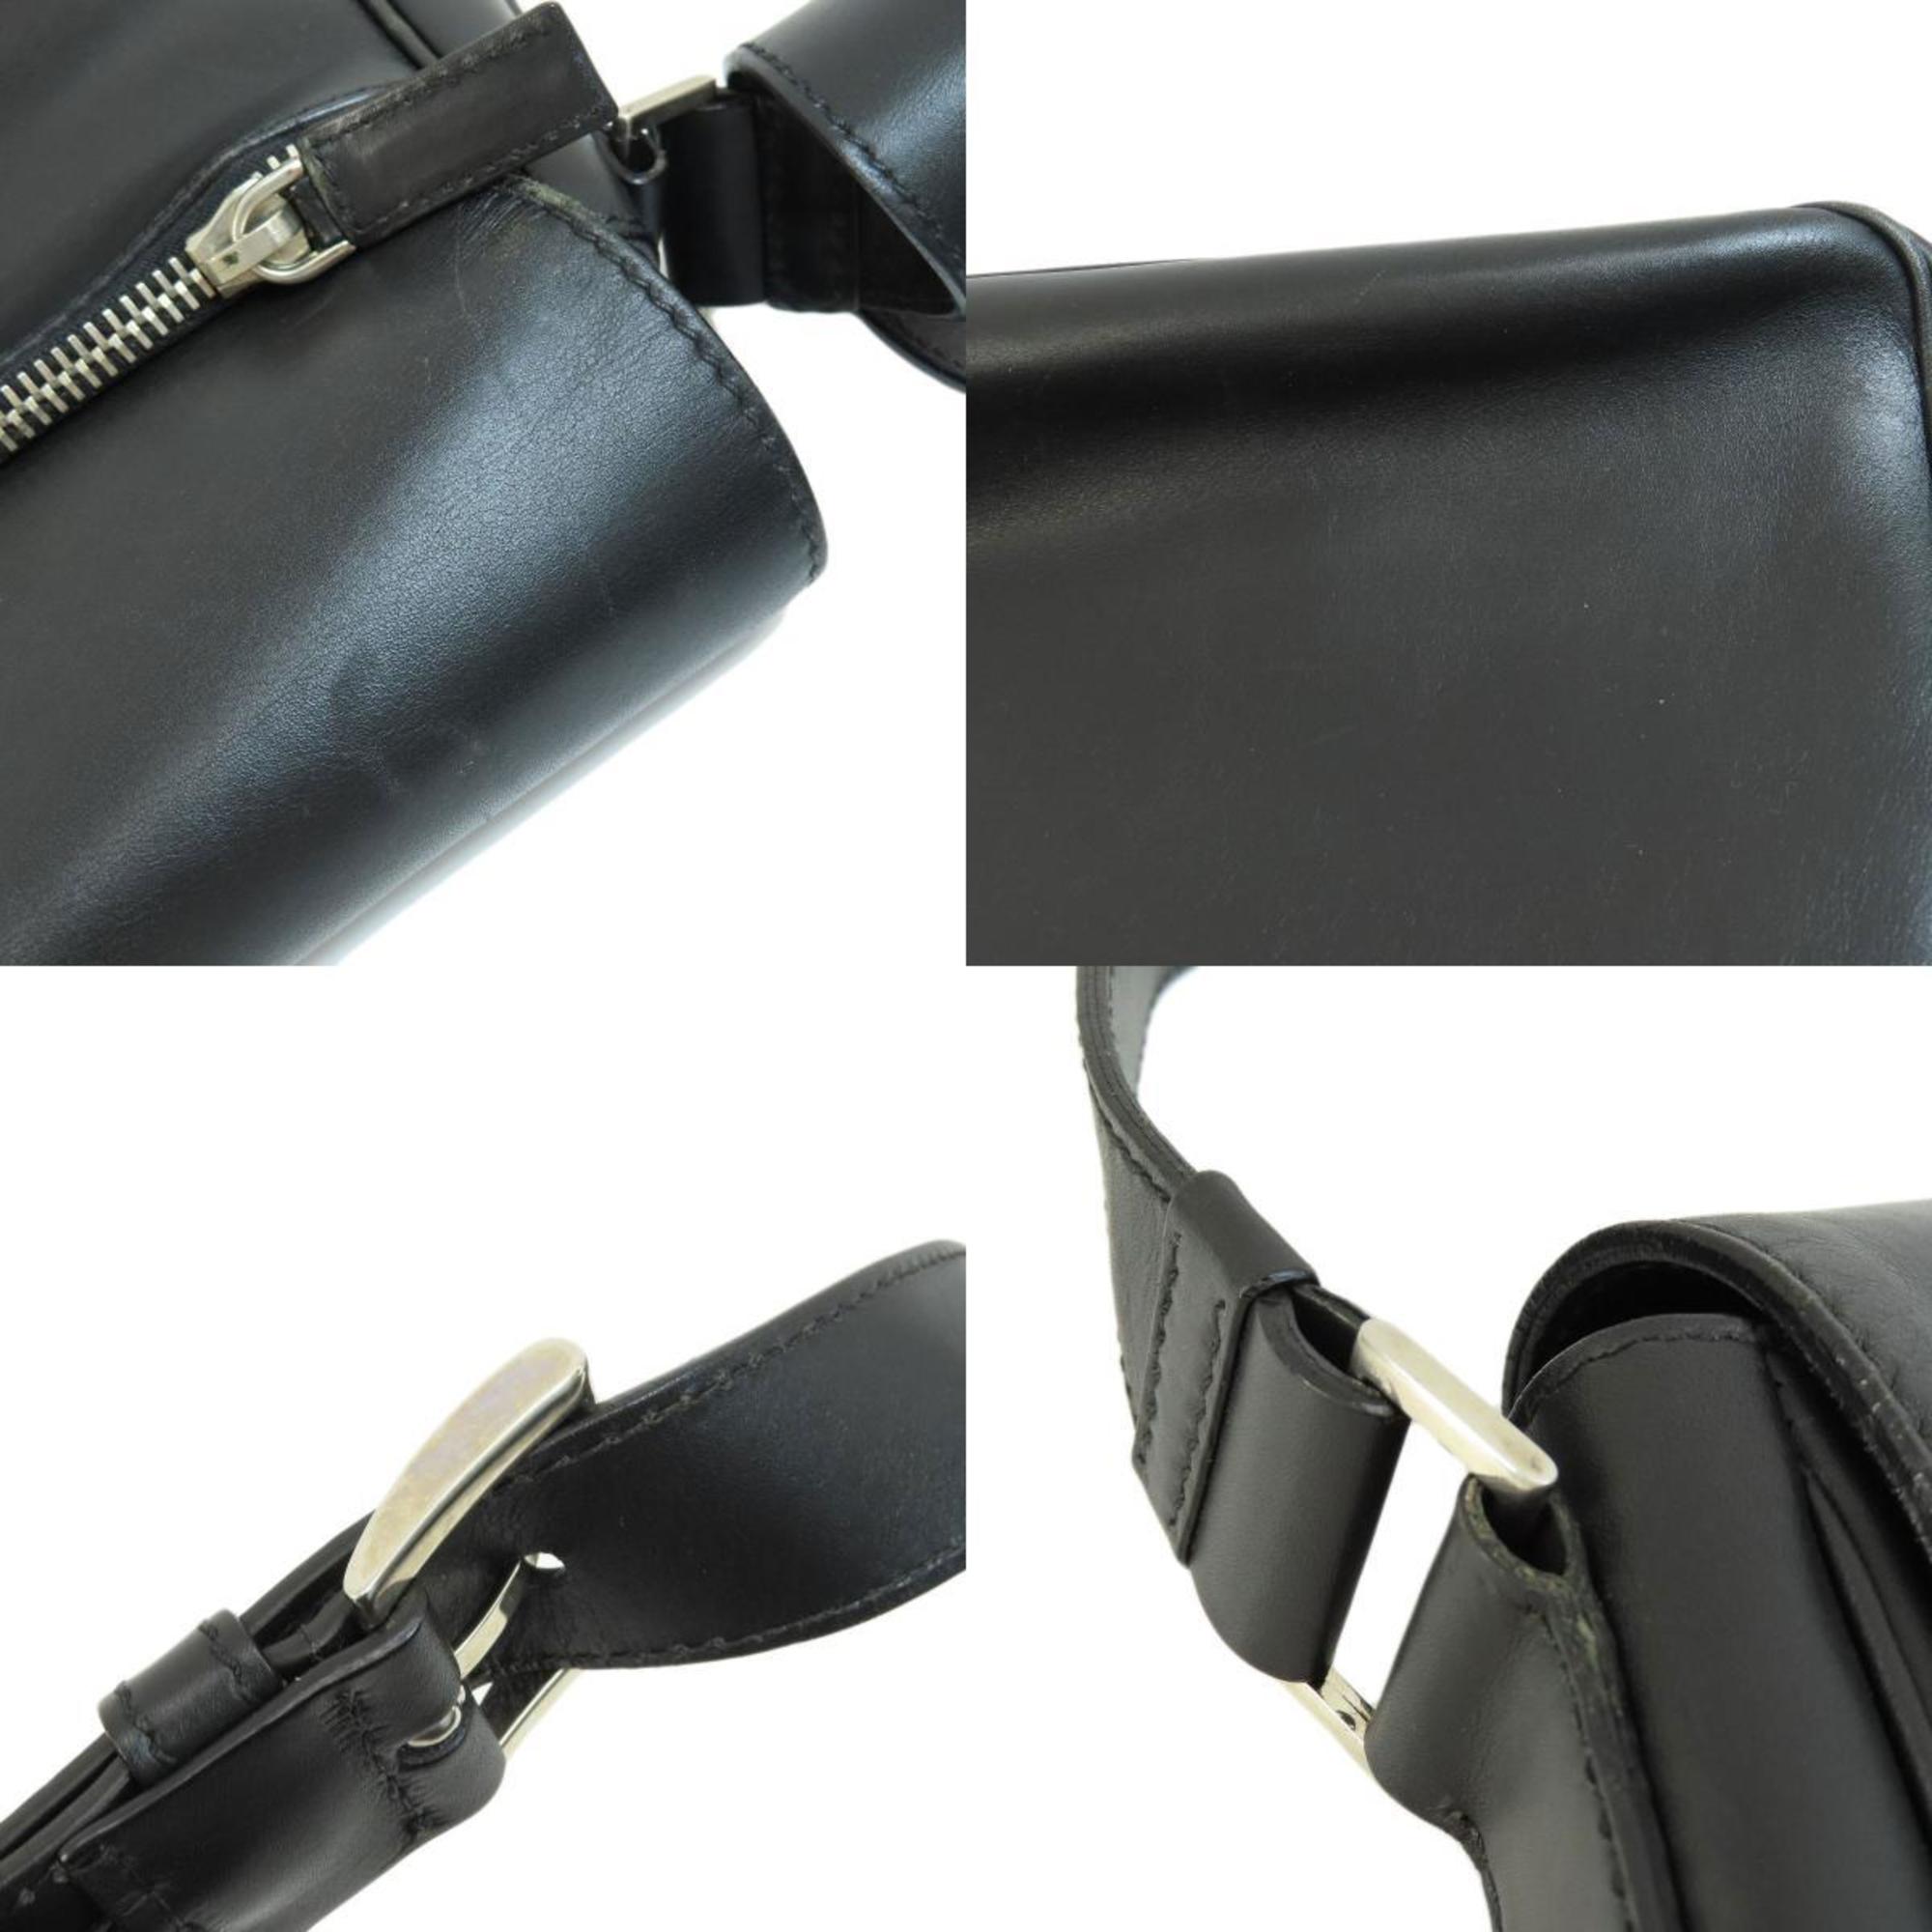 Prada VA0596 Shoulder Bag Leather Women's